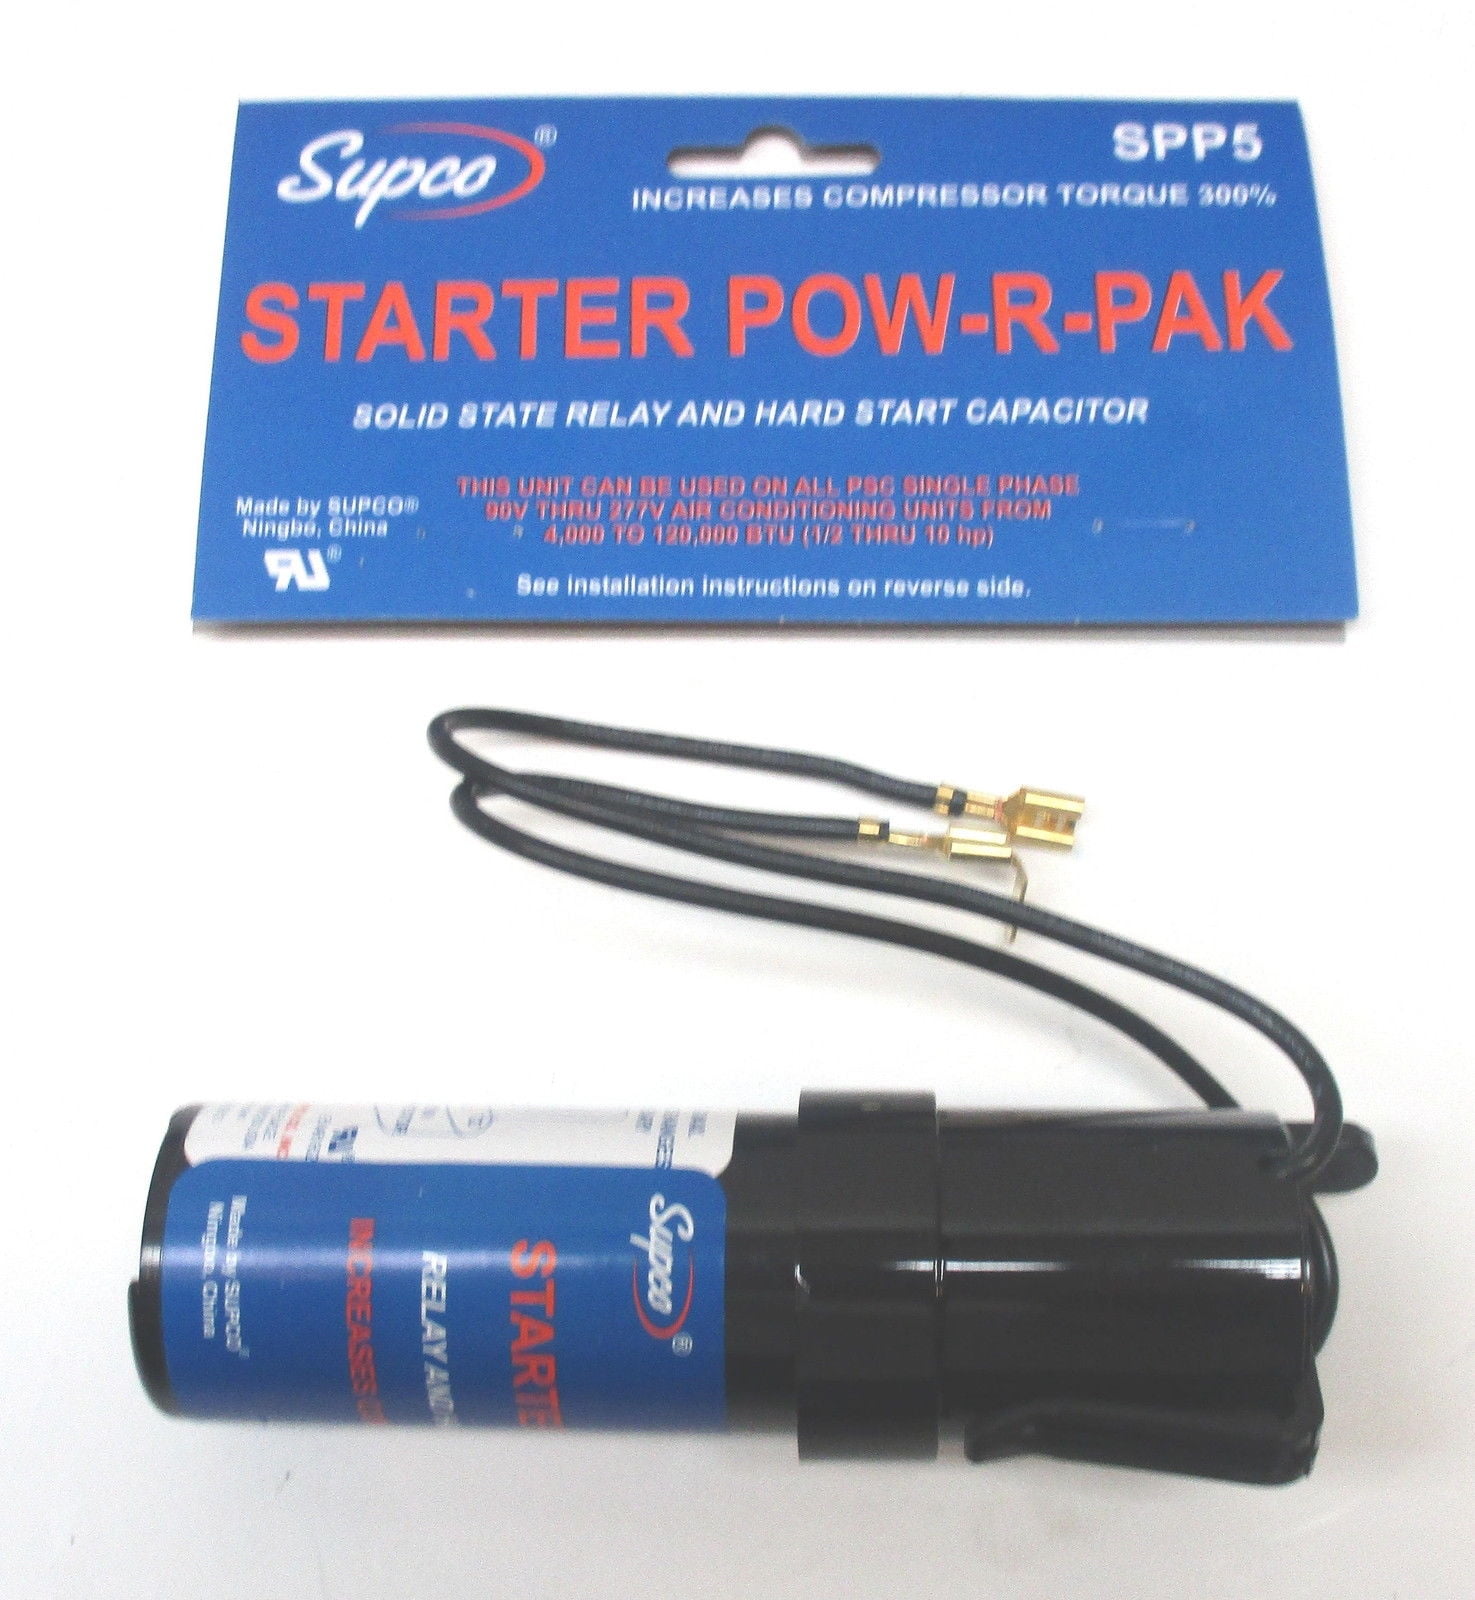 SPP6 Power Start Kit Increases Compressor Starting Torque 